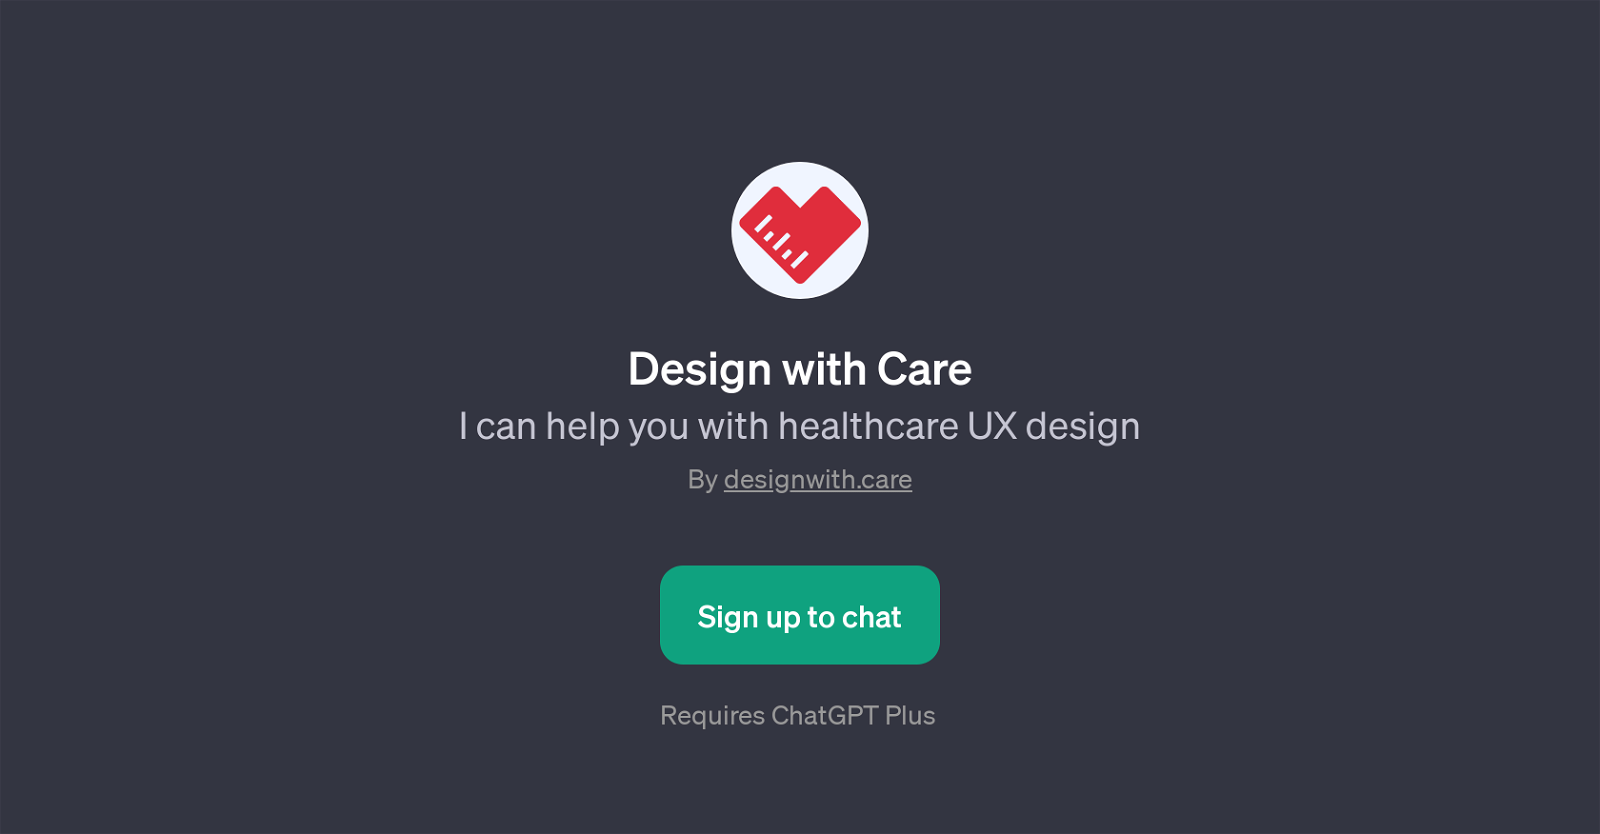 Design with Care website